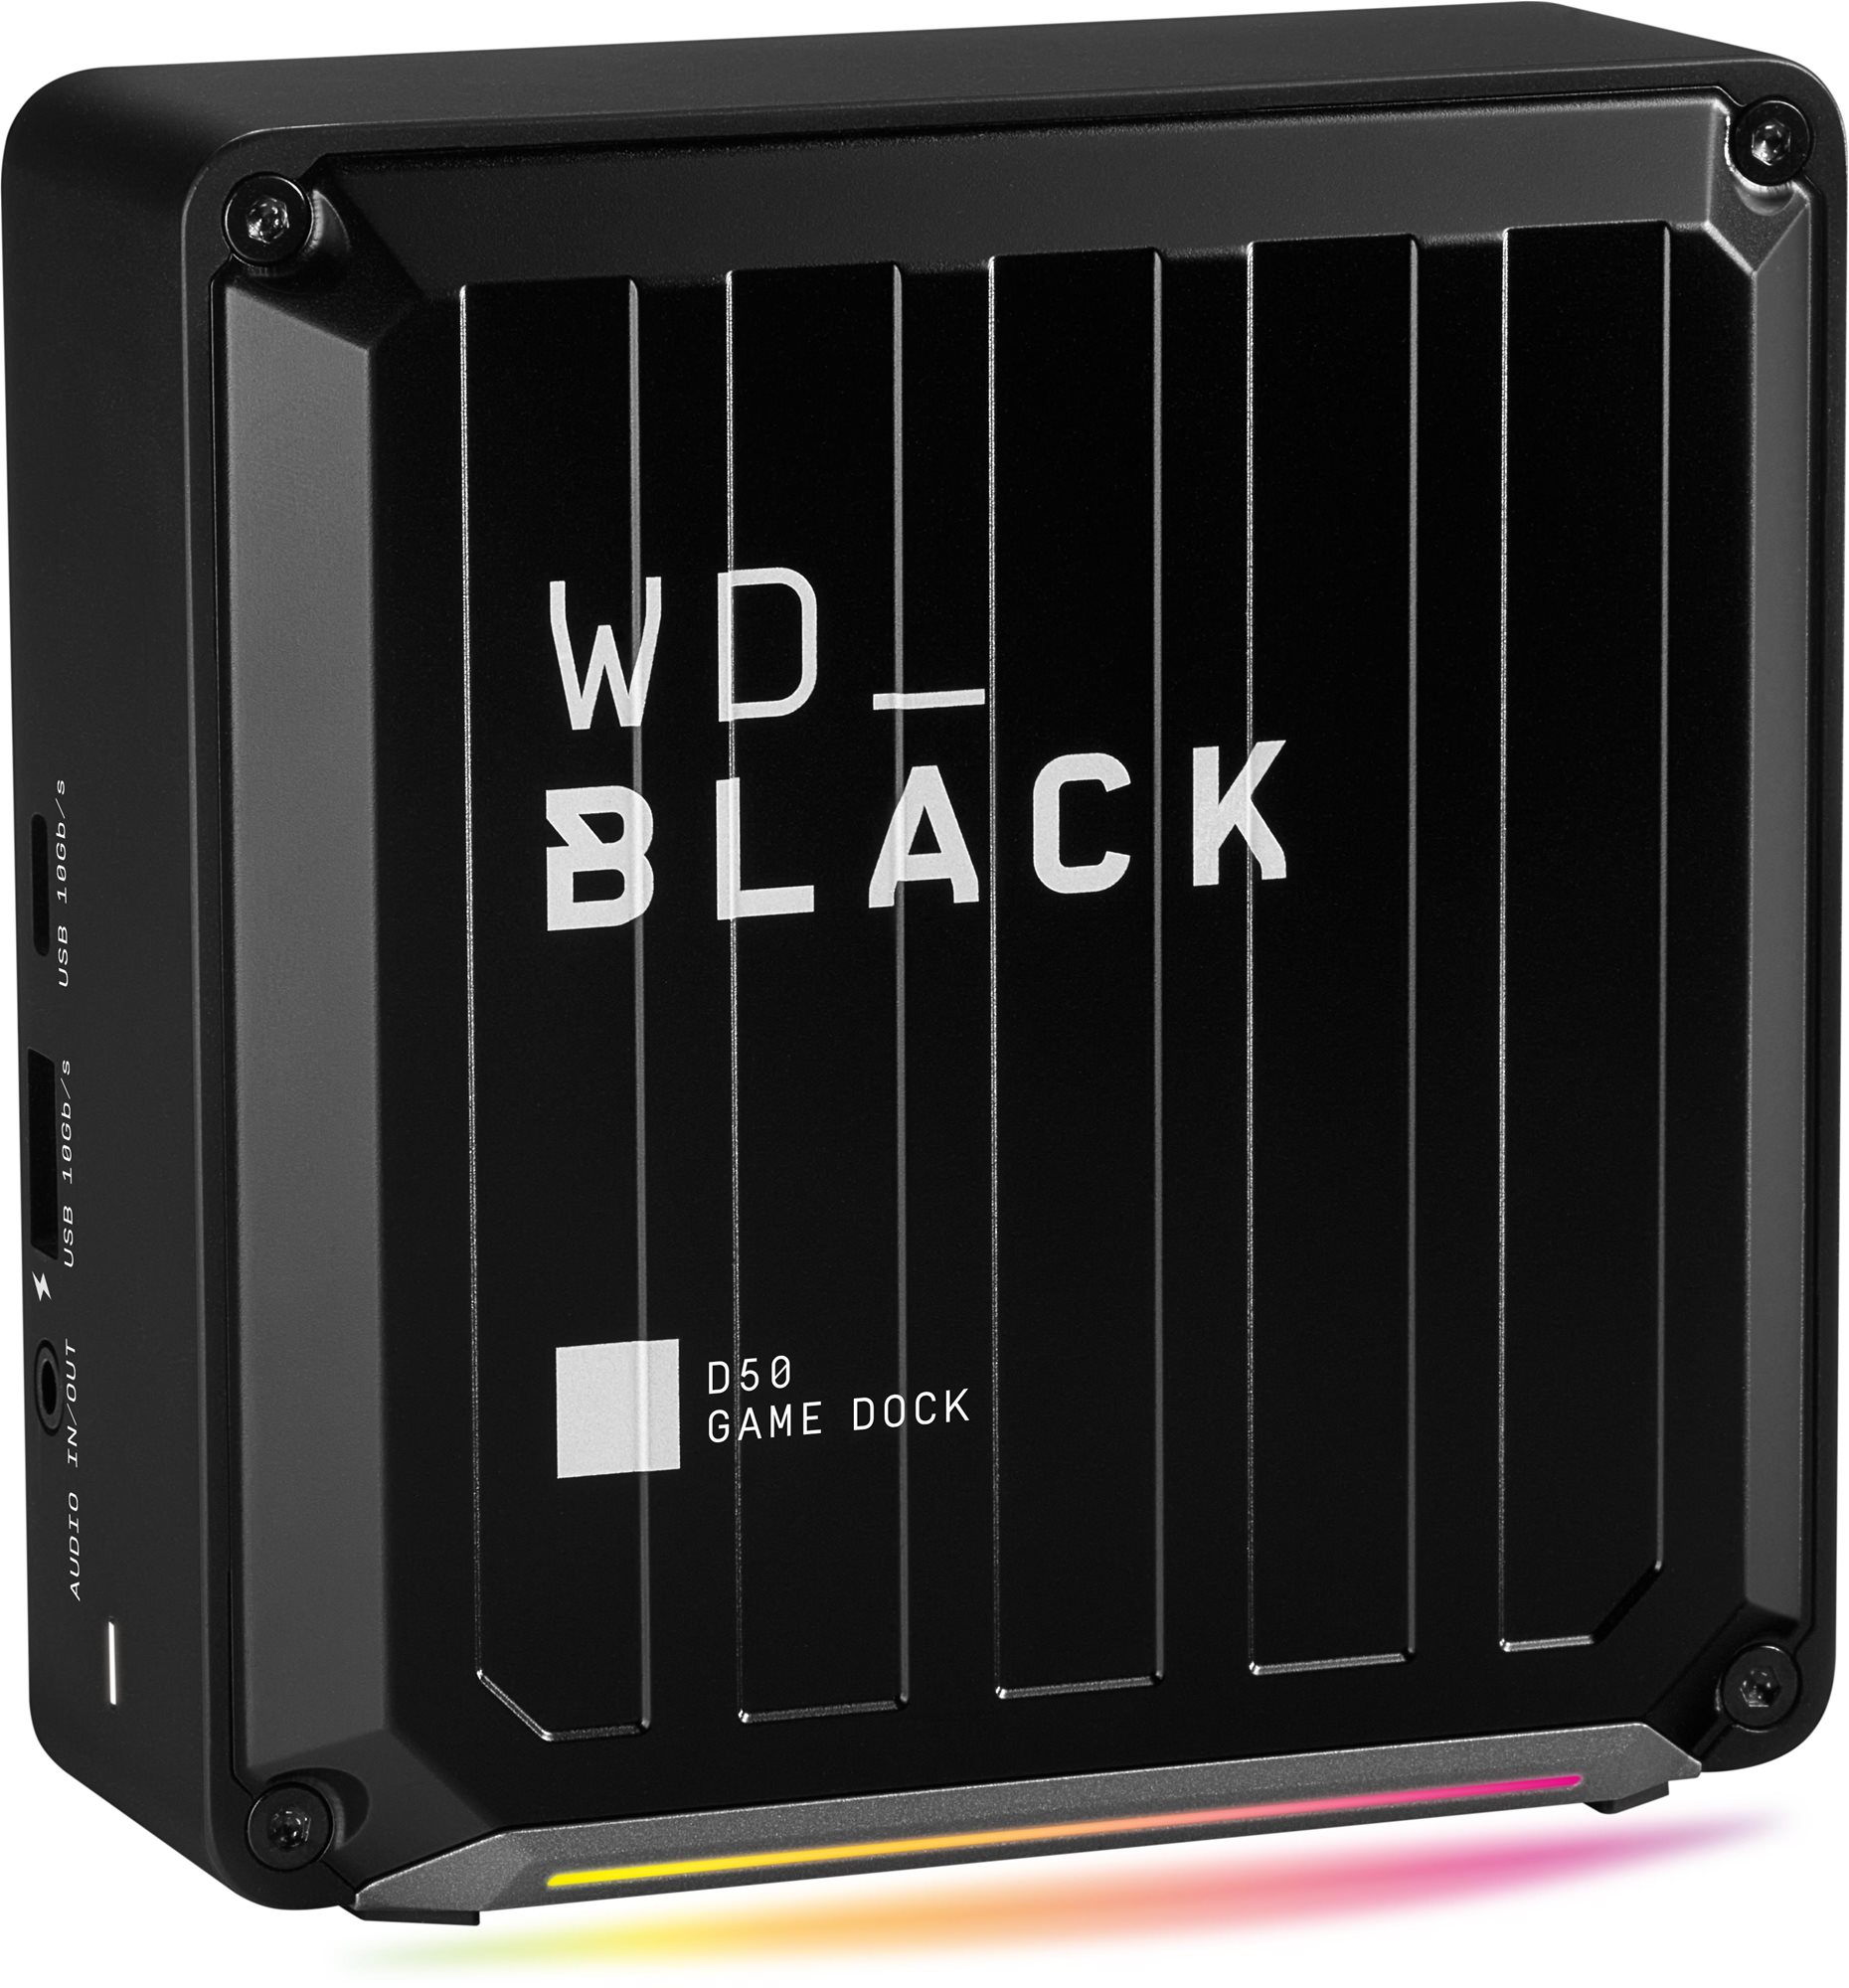 Adattároló WD Black D50 Game Dock 2TB